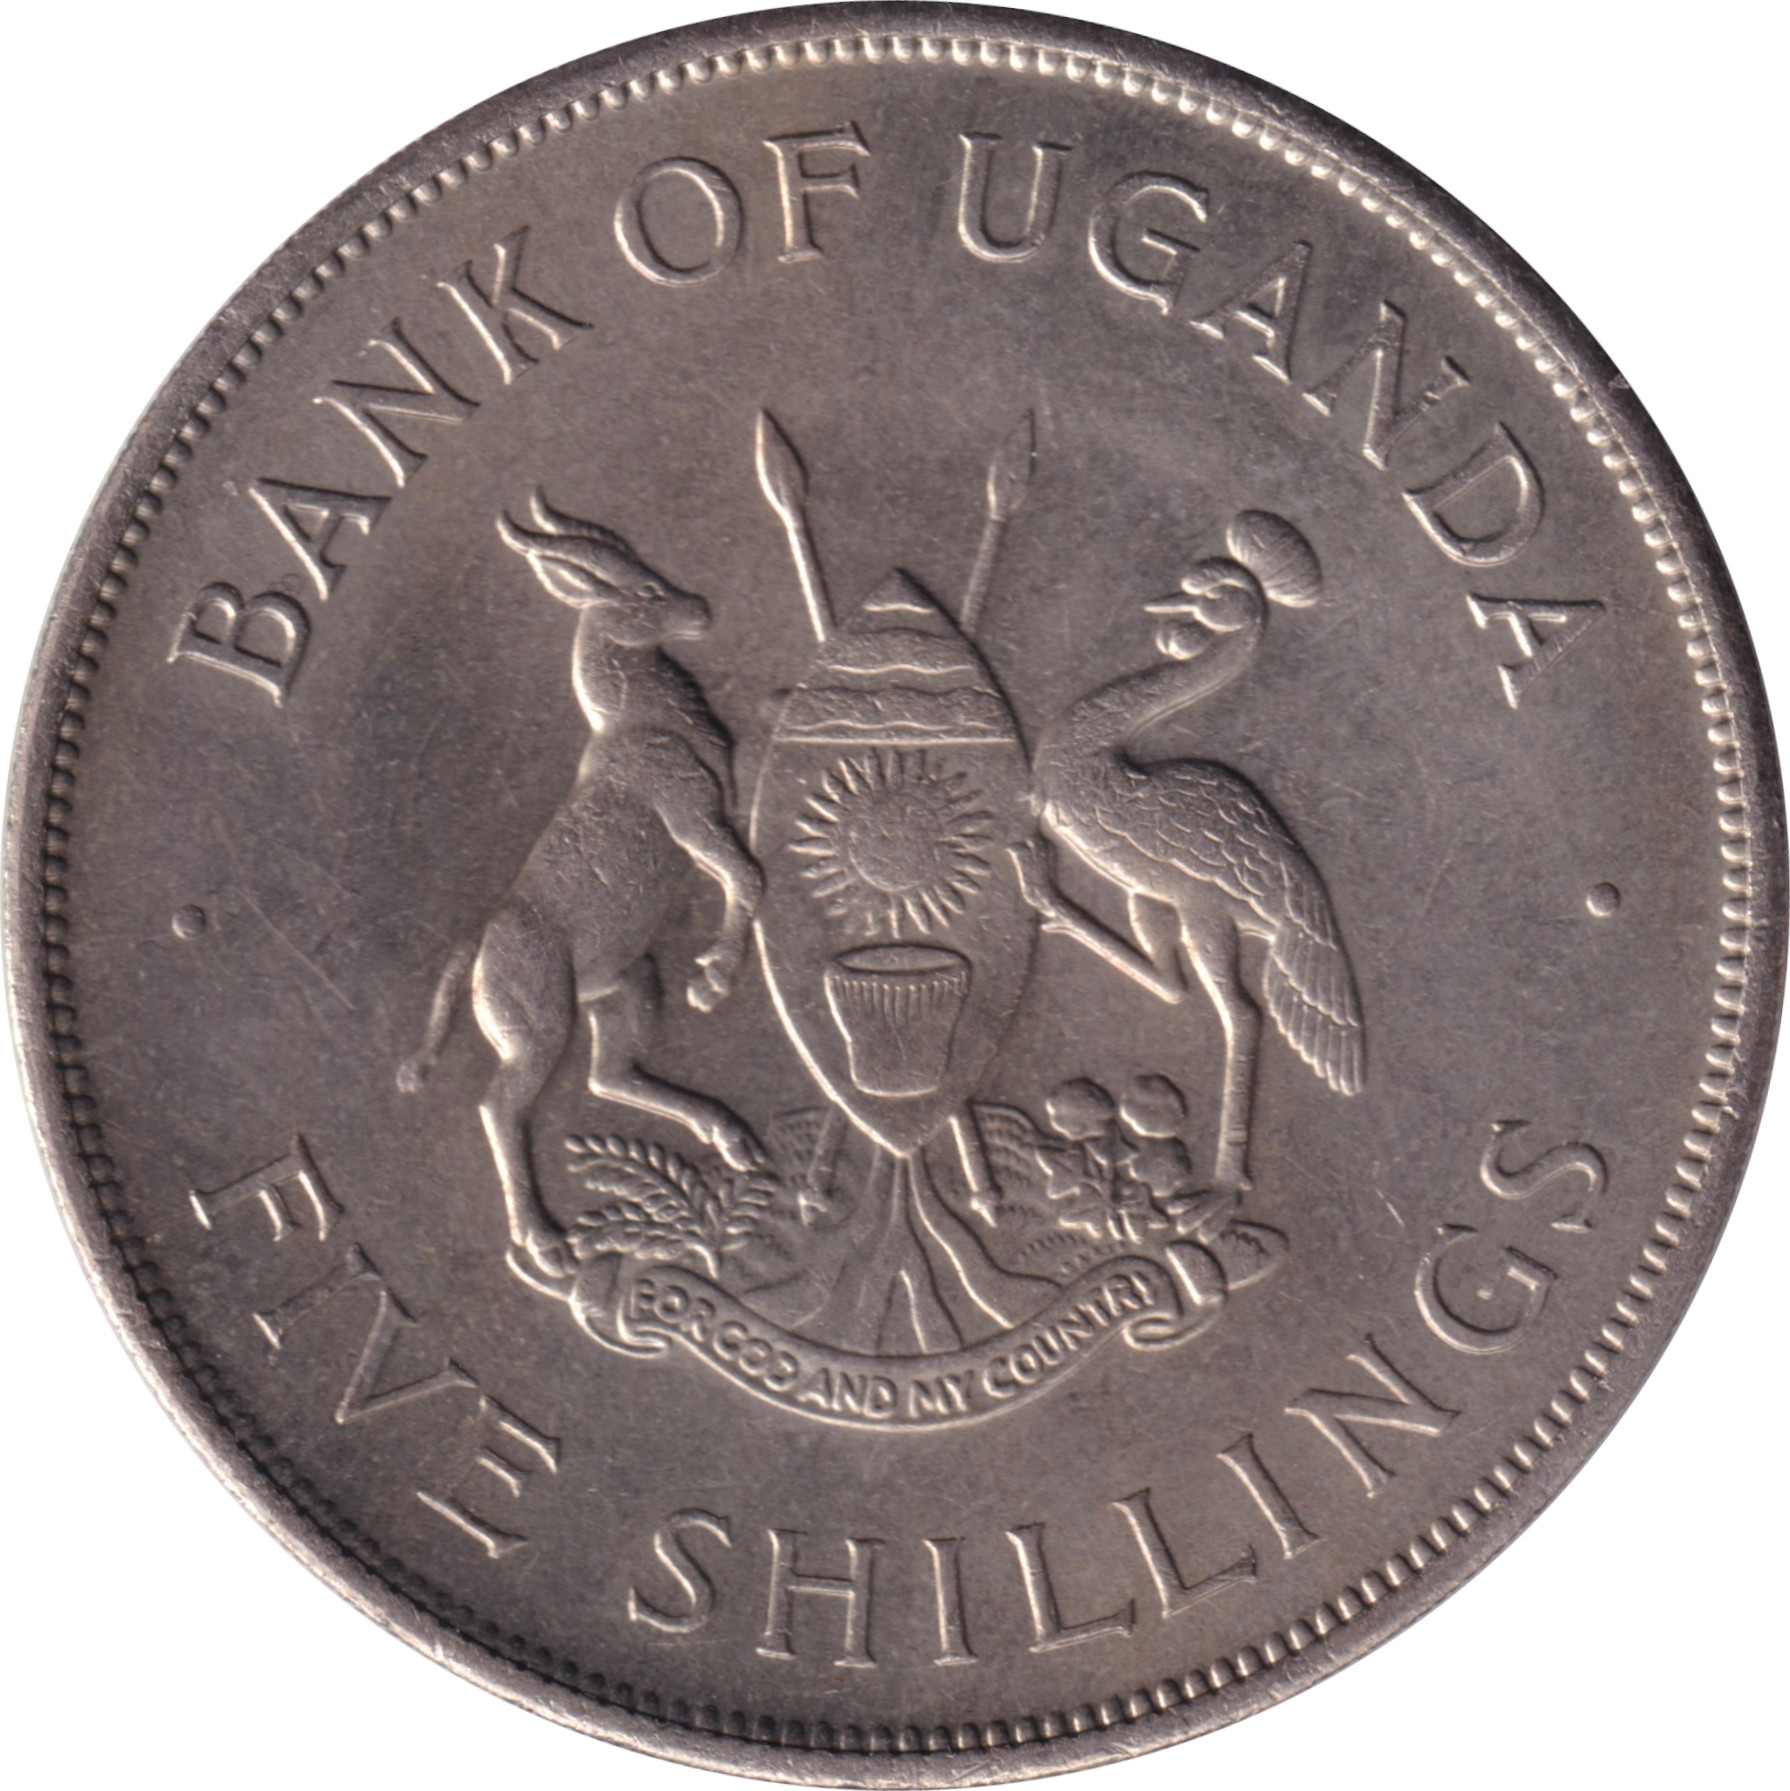 5 shillings - FAO